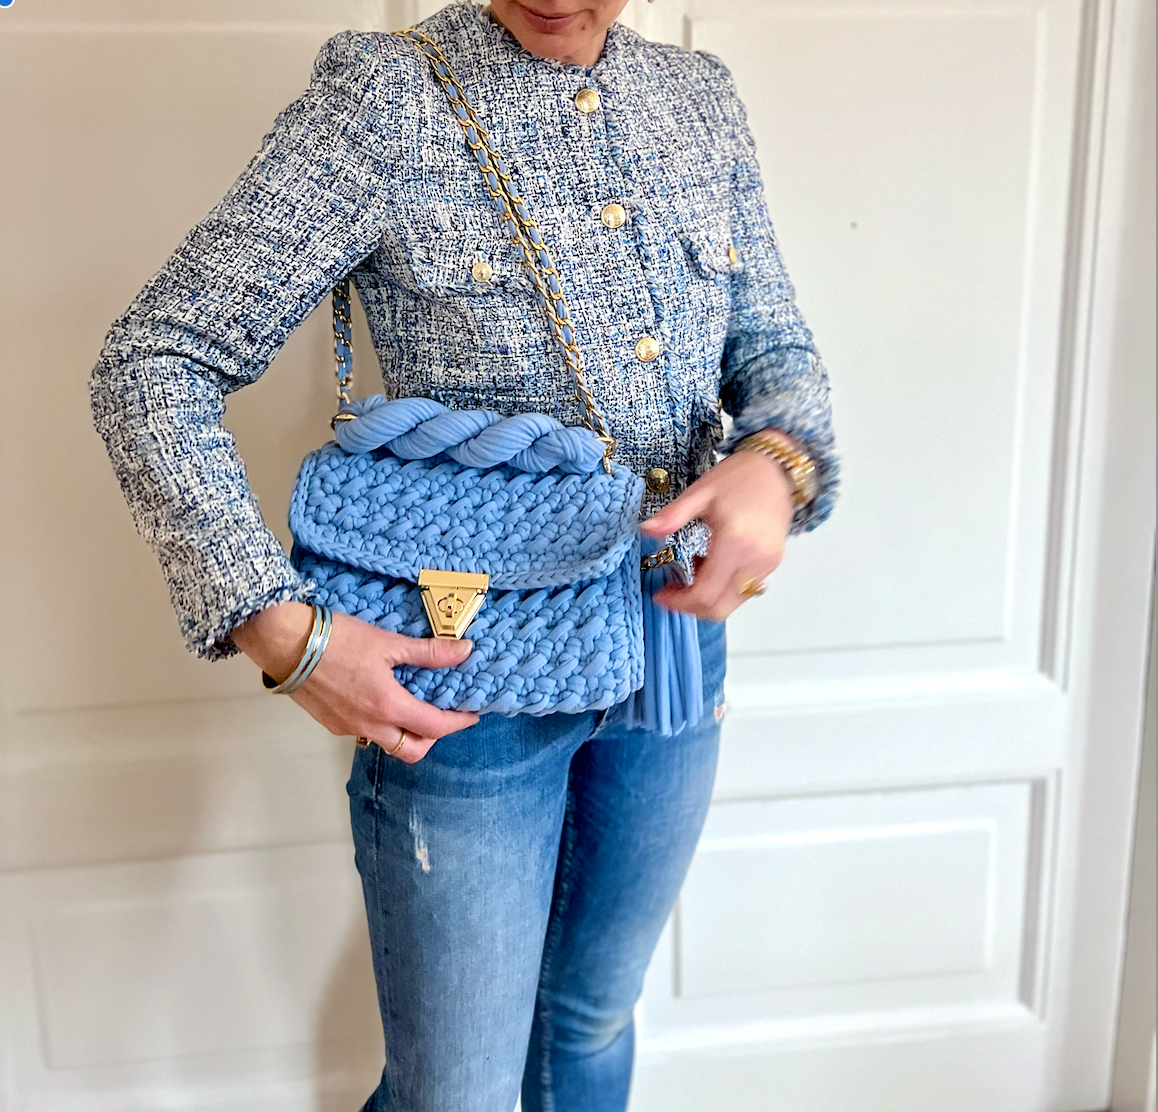 Archiella Knitted Handbag Cannes Gold